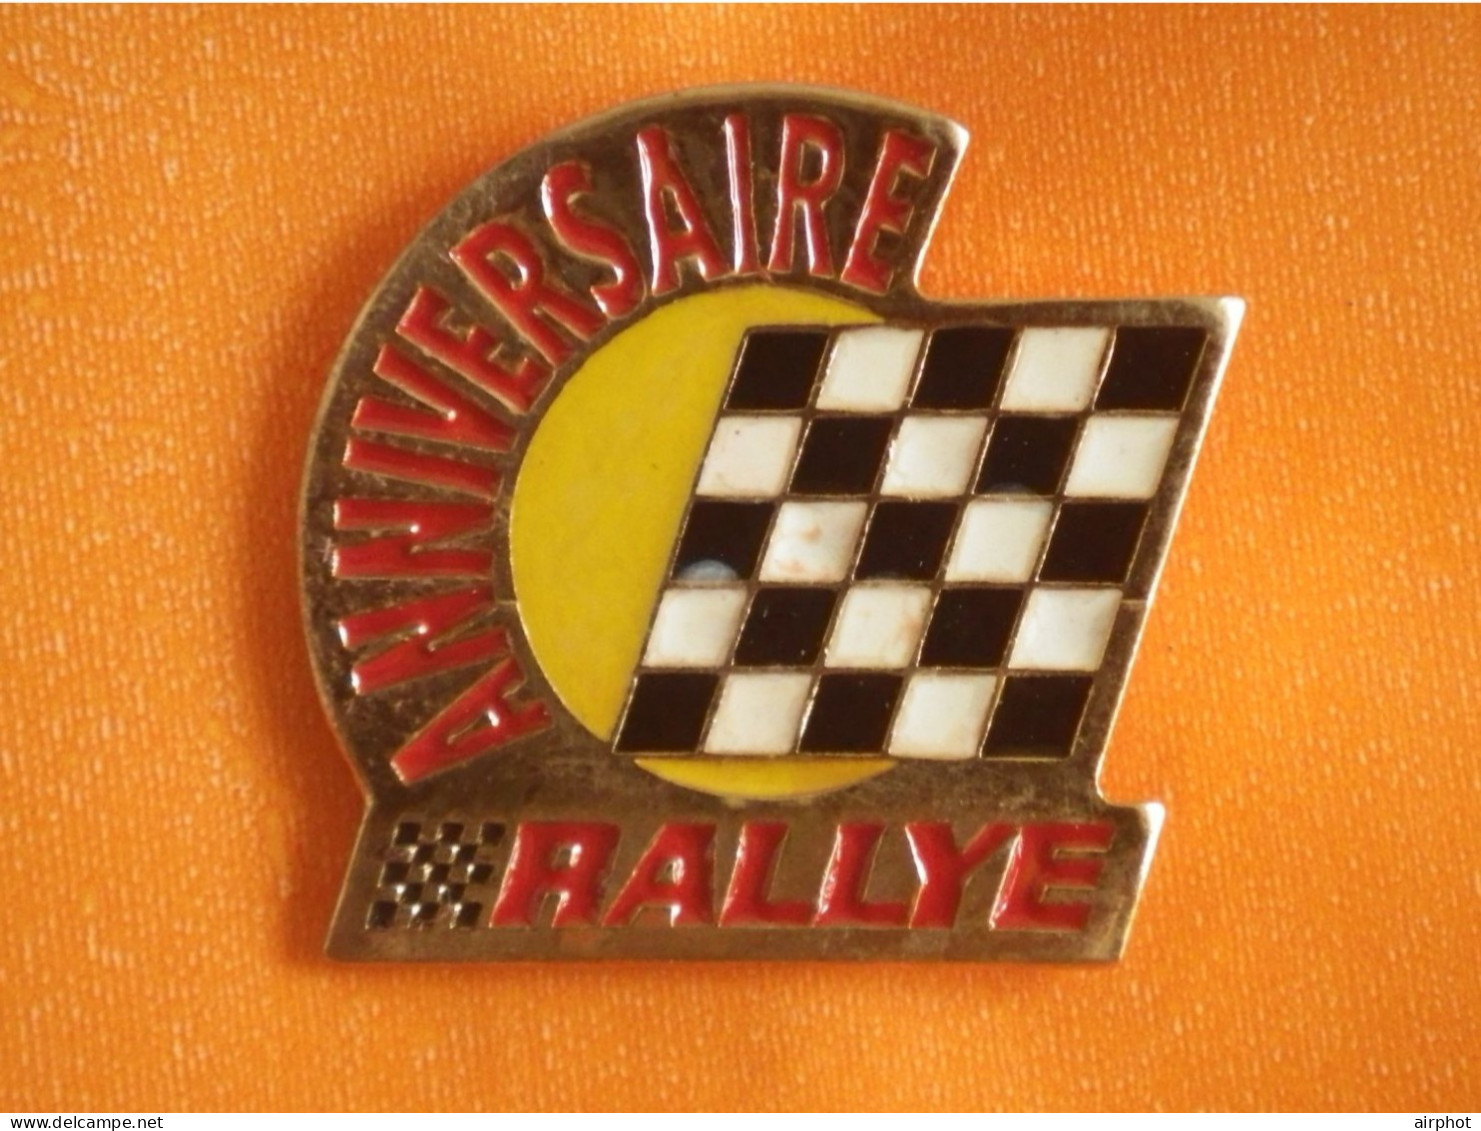 RALLYE ANNIVERSAIRE - Rallye